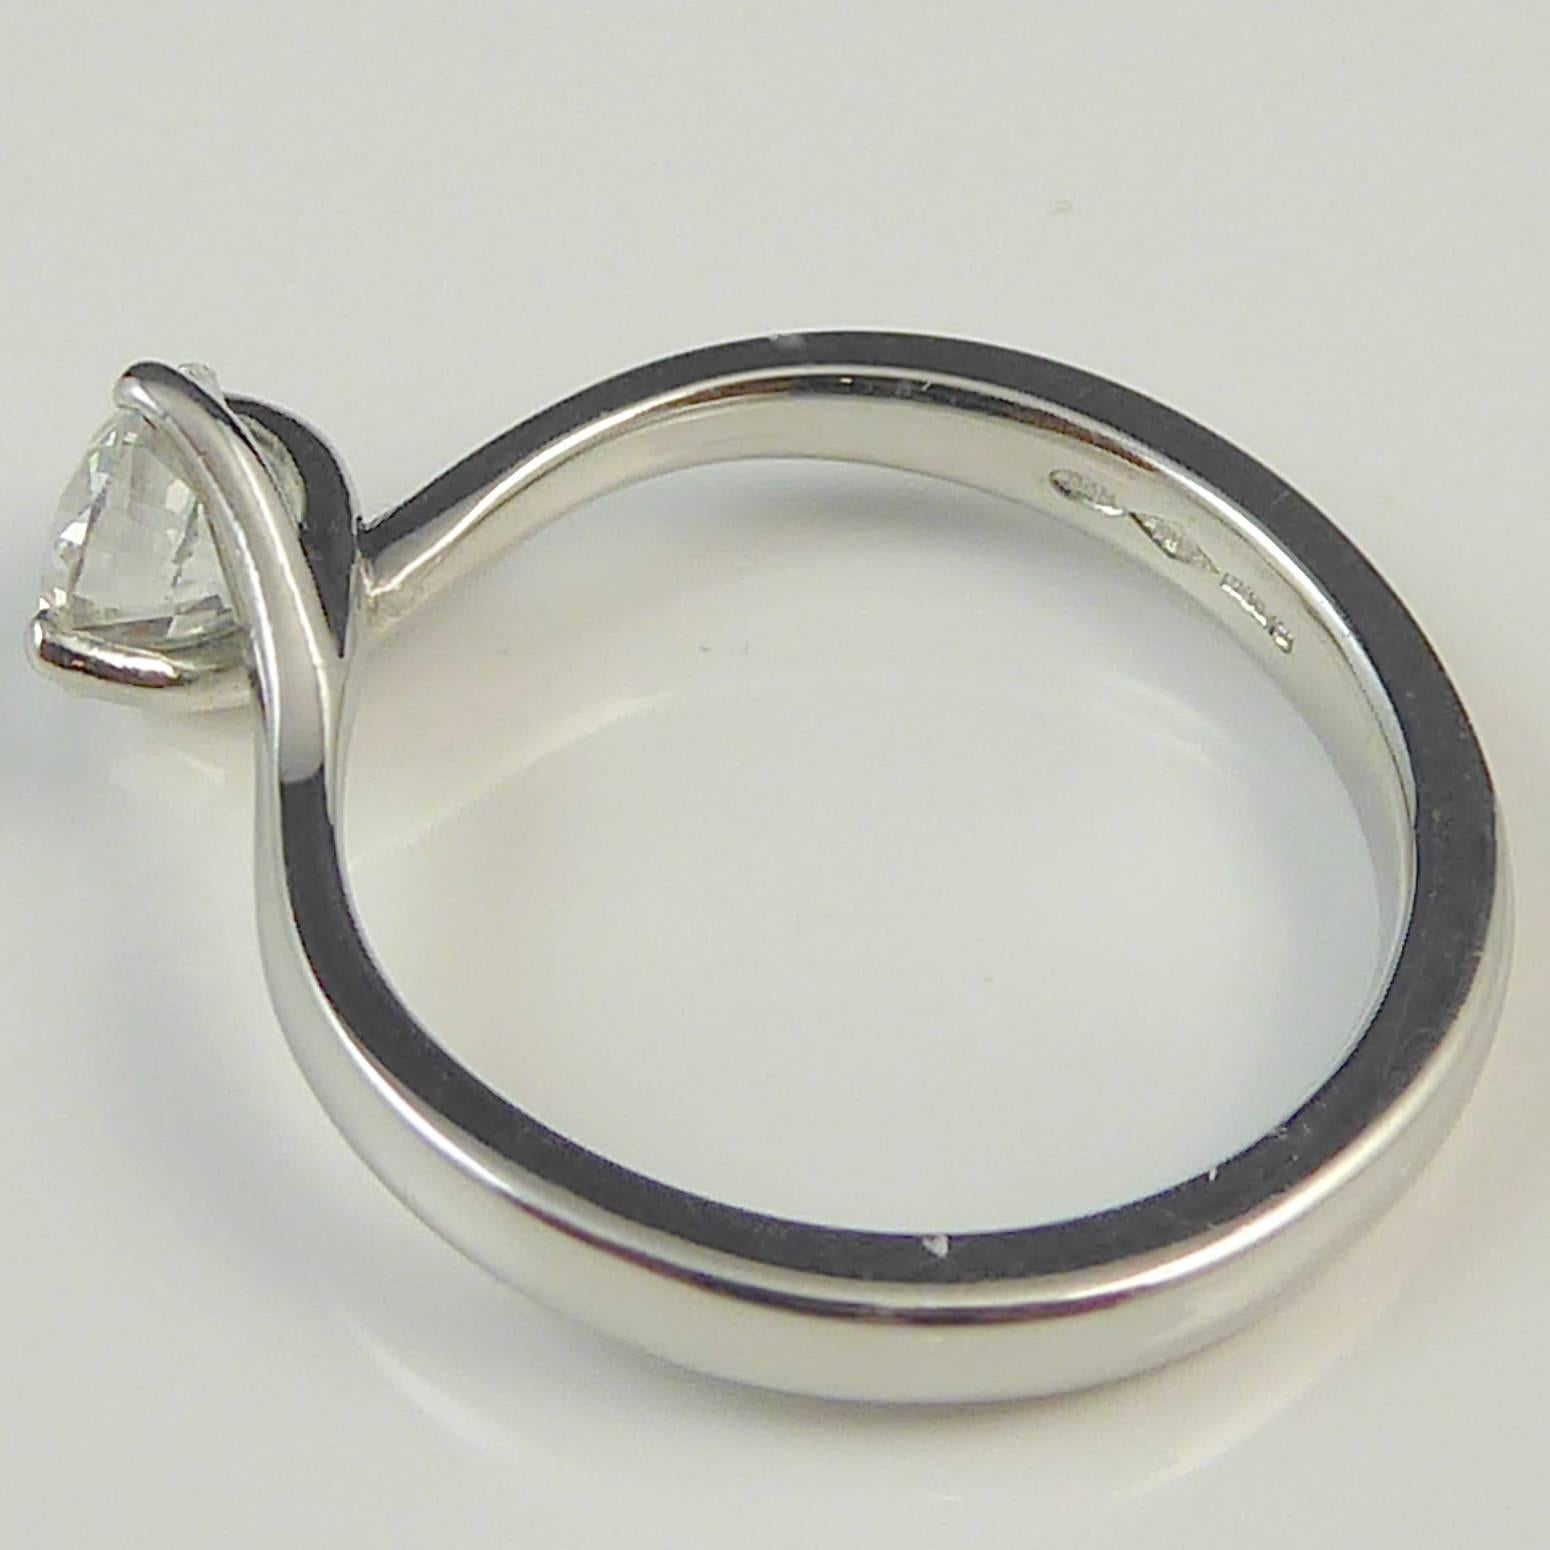 4 carat solitaire diamond engagement ring